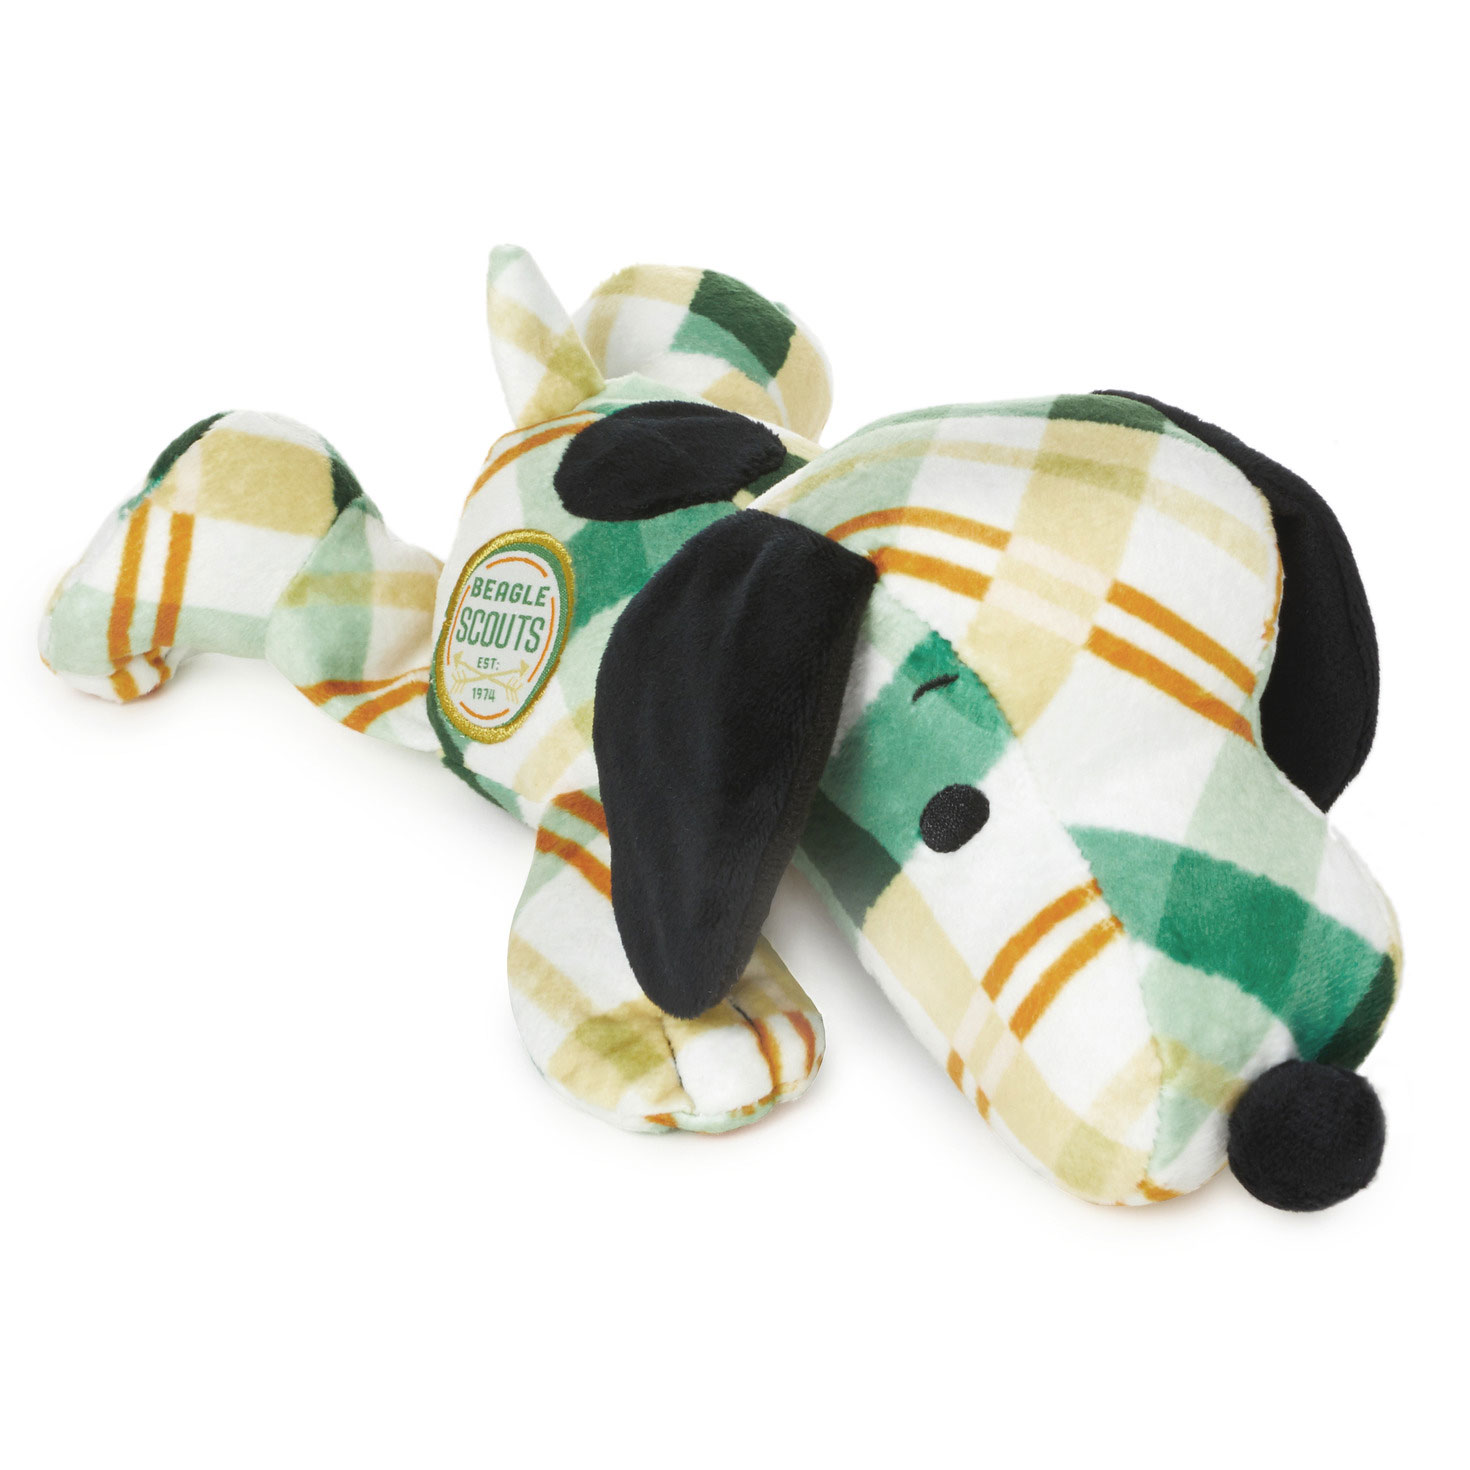 Peanuts® Beagle Scouts Floppy Snoopy Plush, 10 - Classic Stuffed Animals